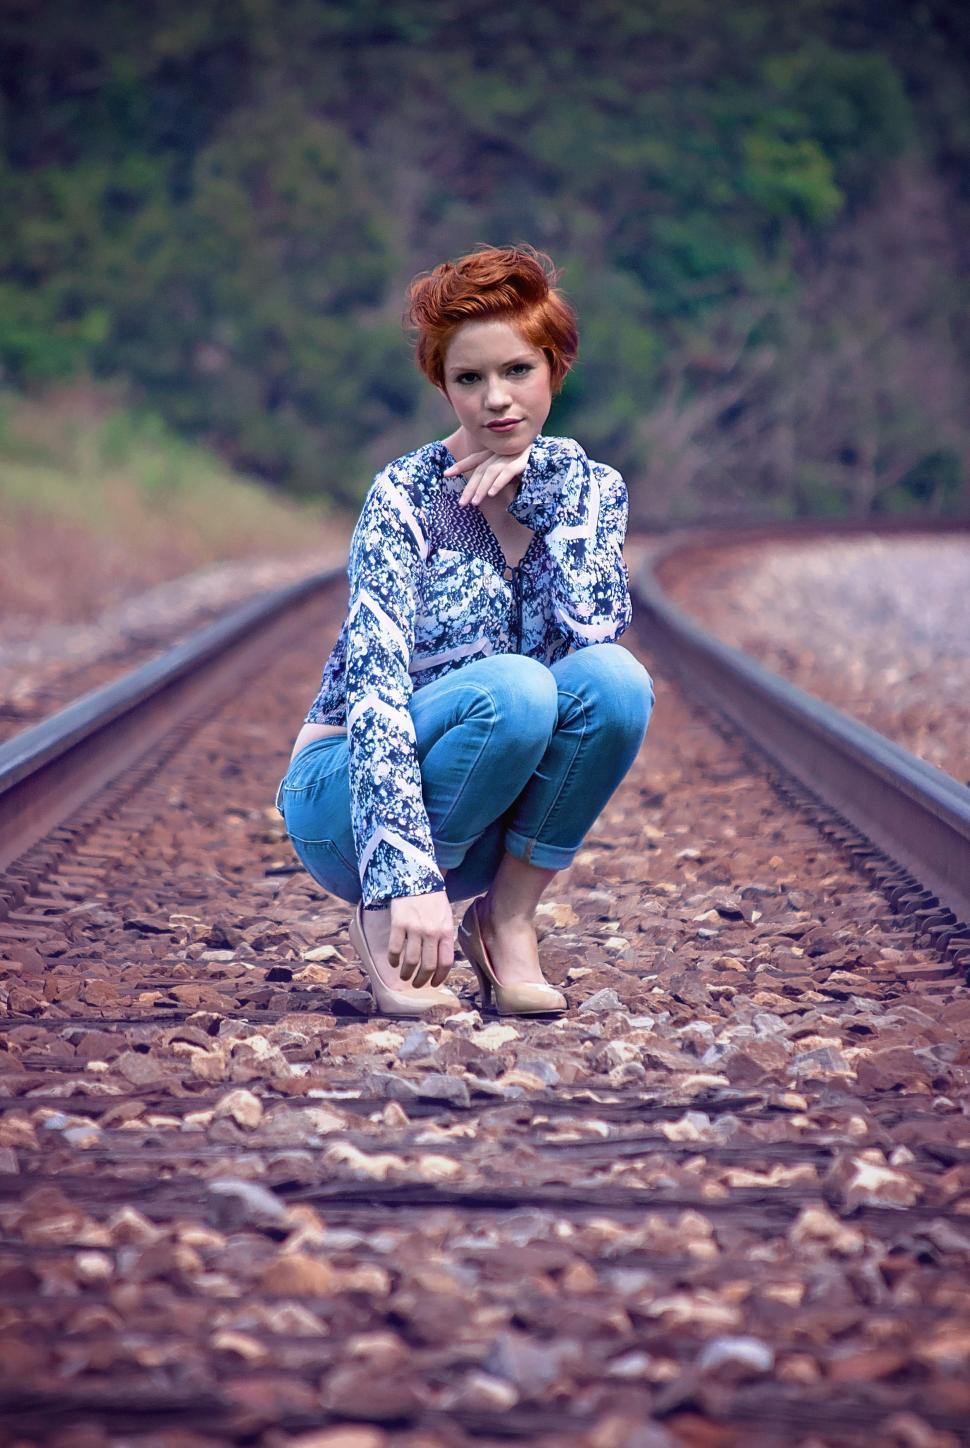 Free Image of Redhead Woman Squatting on Rail-track  